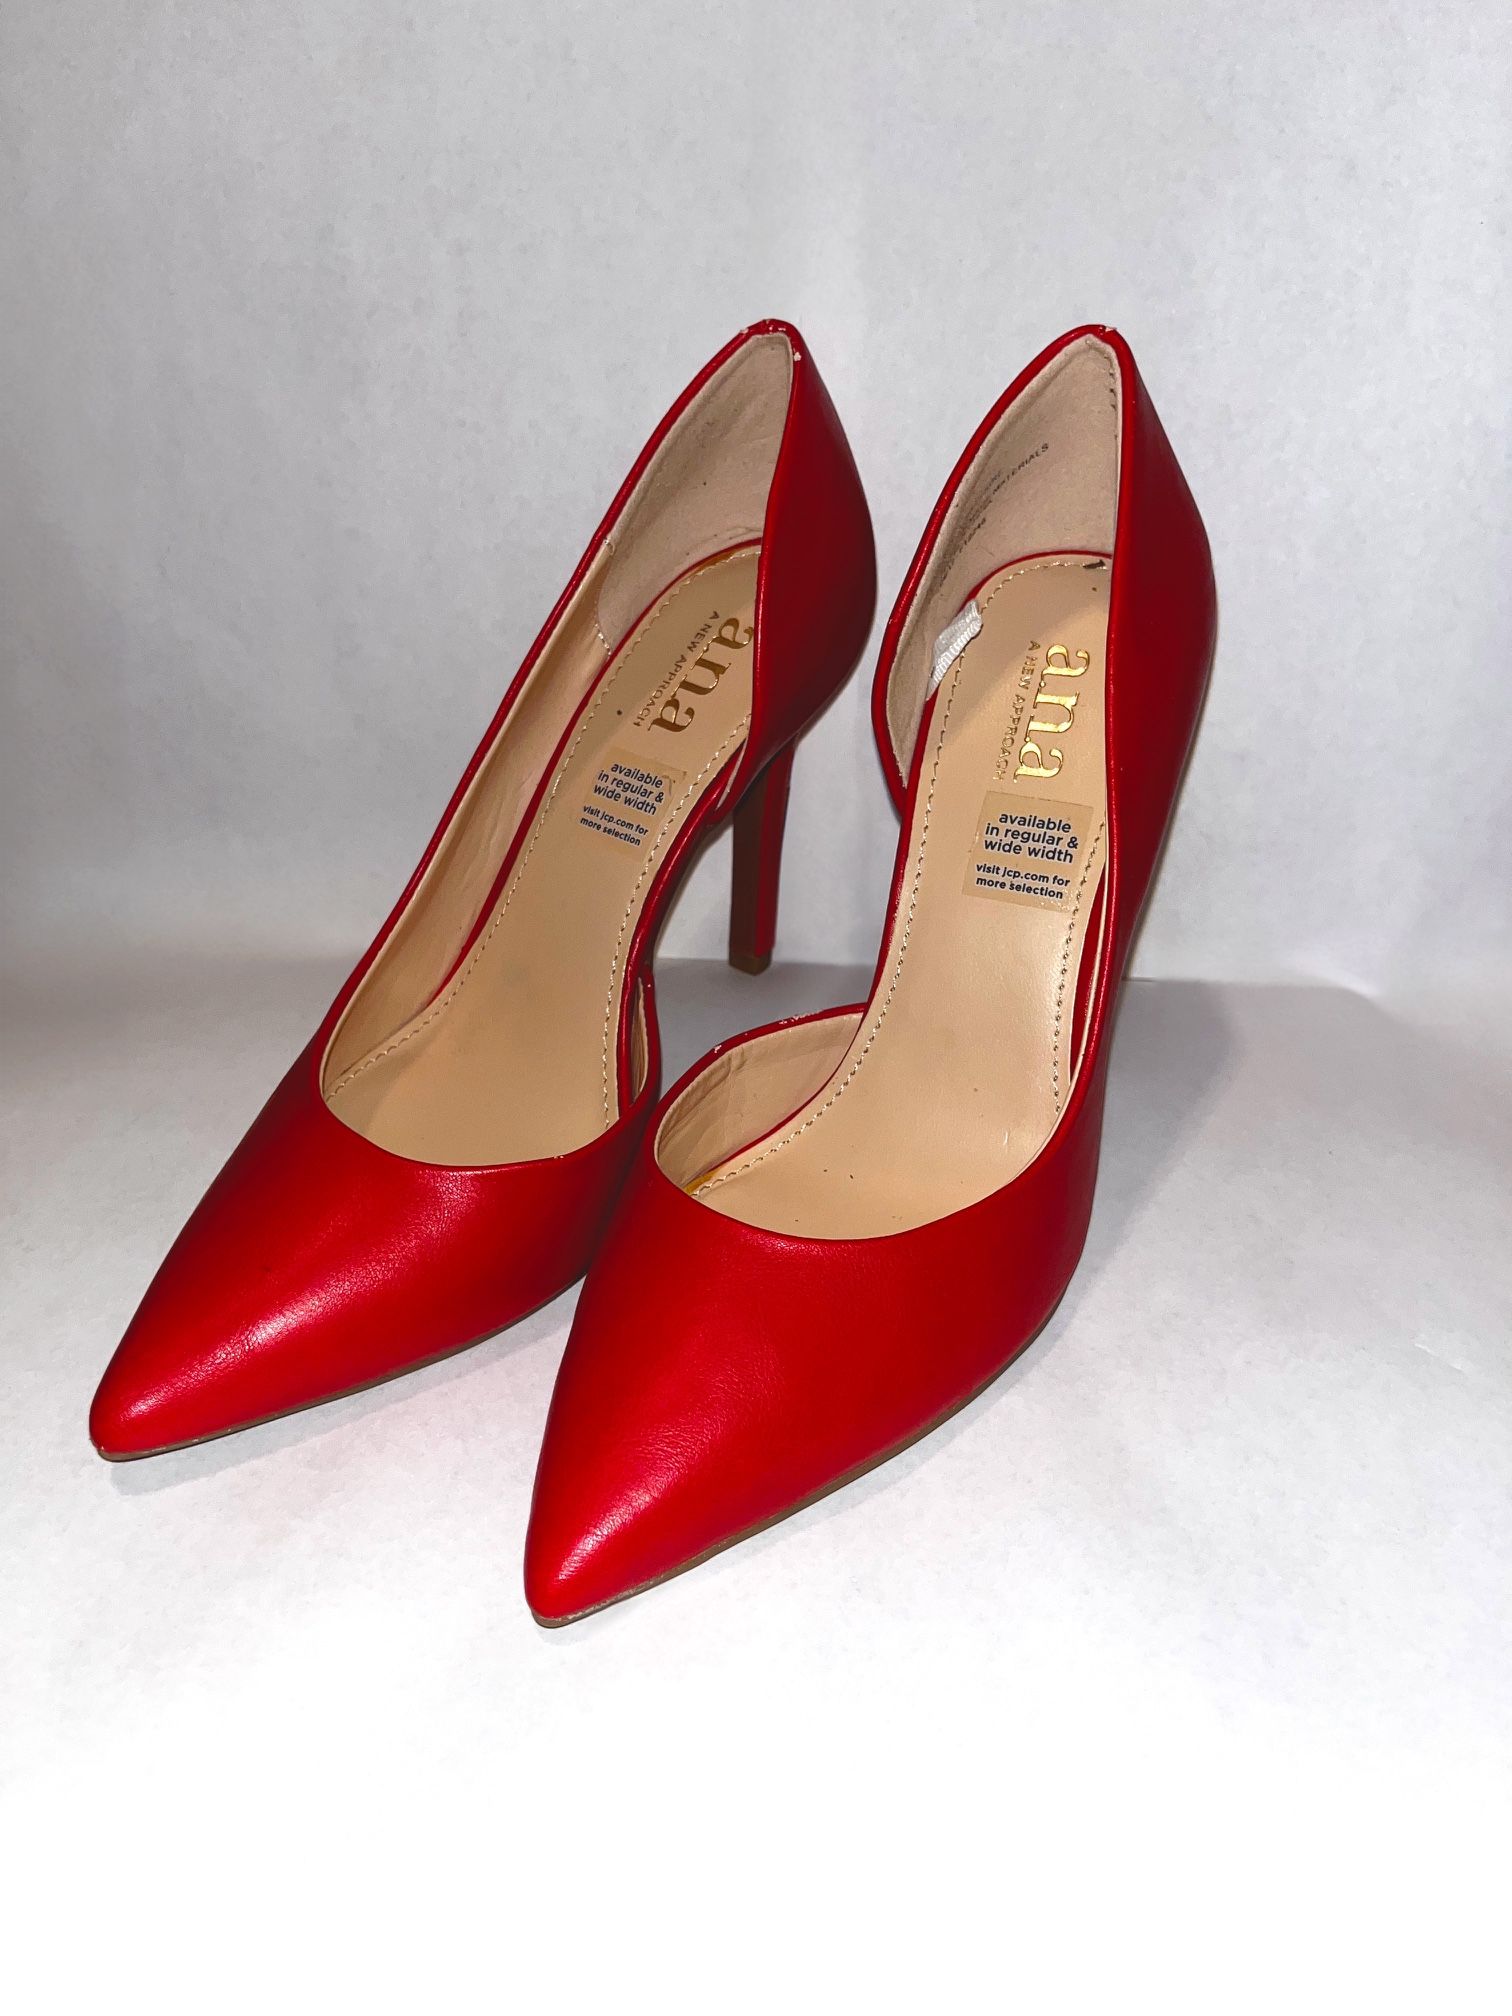 Ann Taylor Ana Red Pump heels size 7